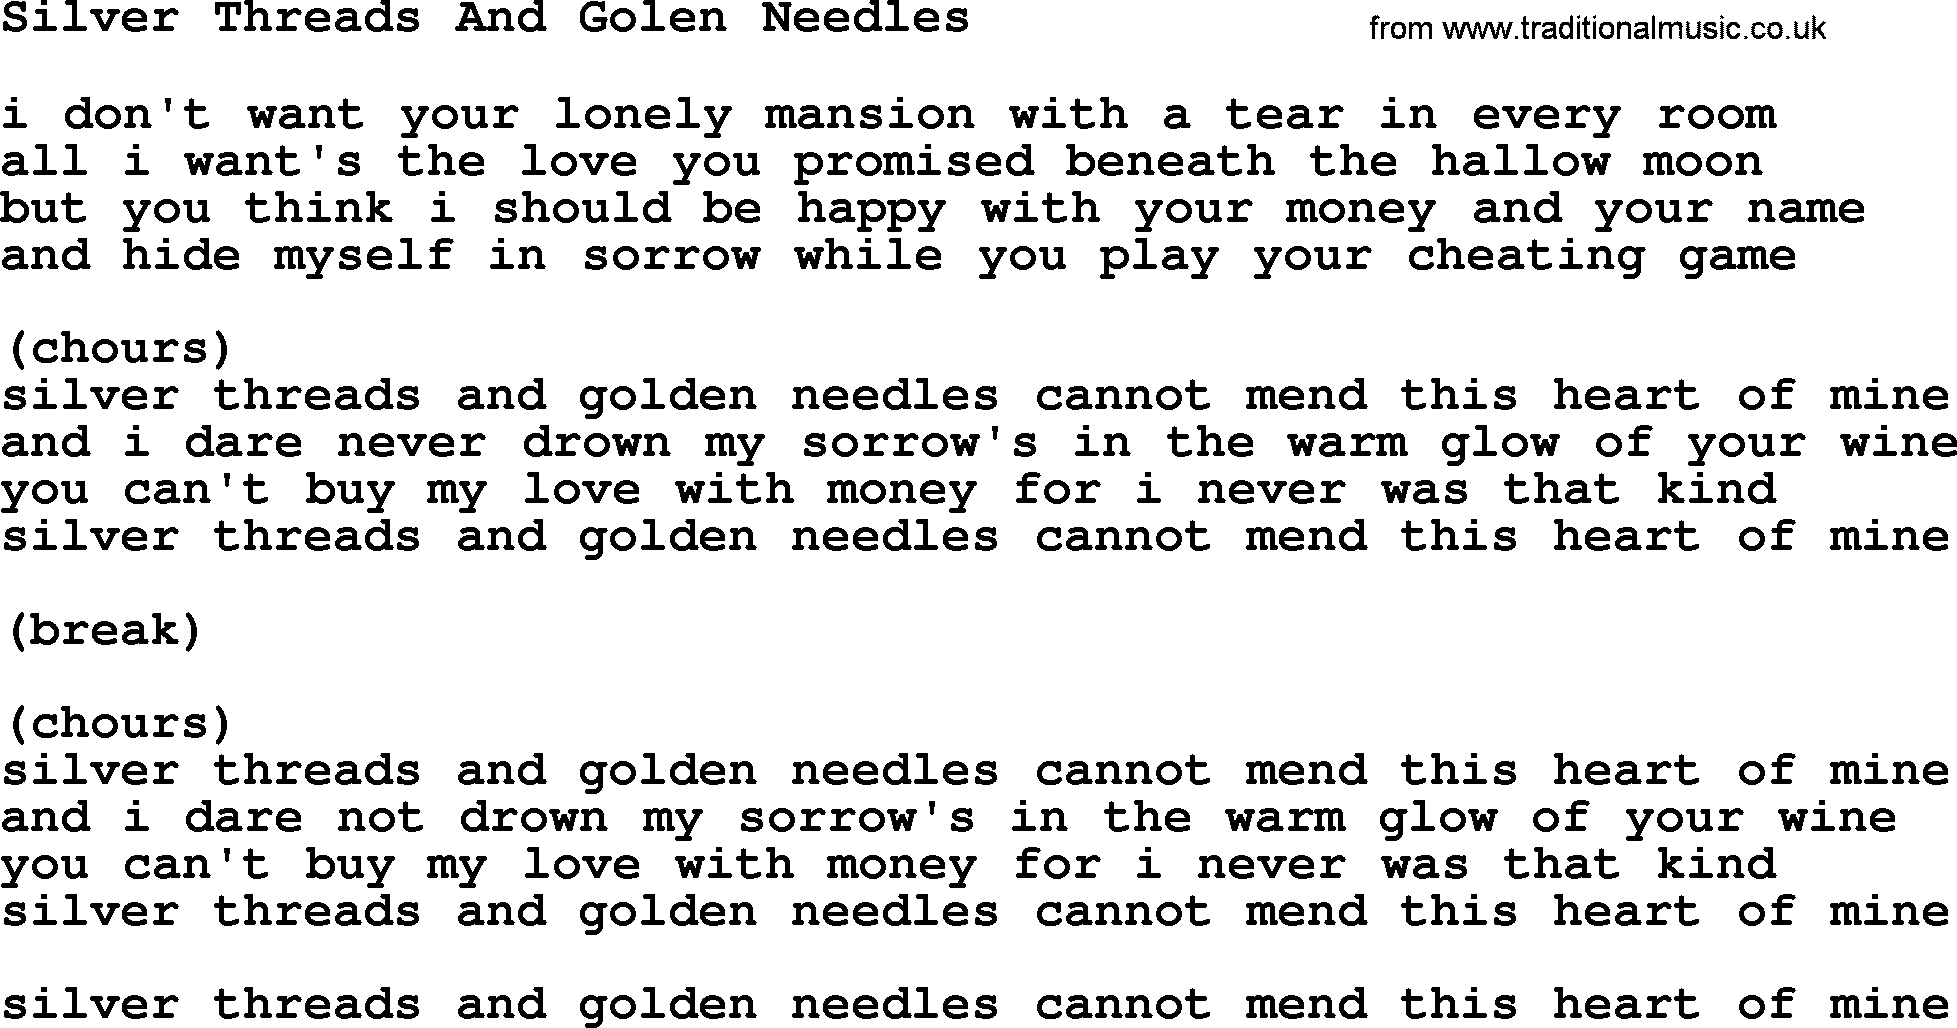 Loretta Lynn song: Silver Threads And Golen Needles lyrics